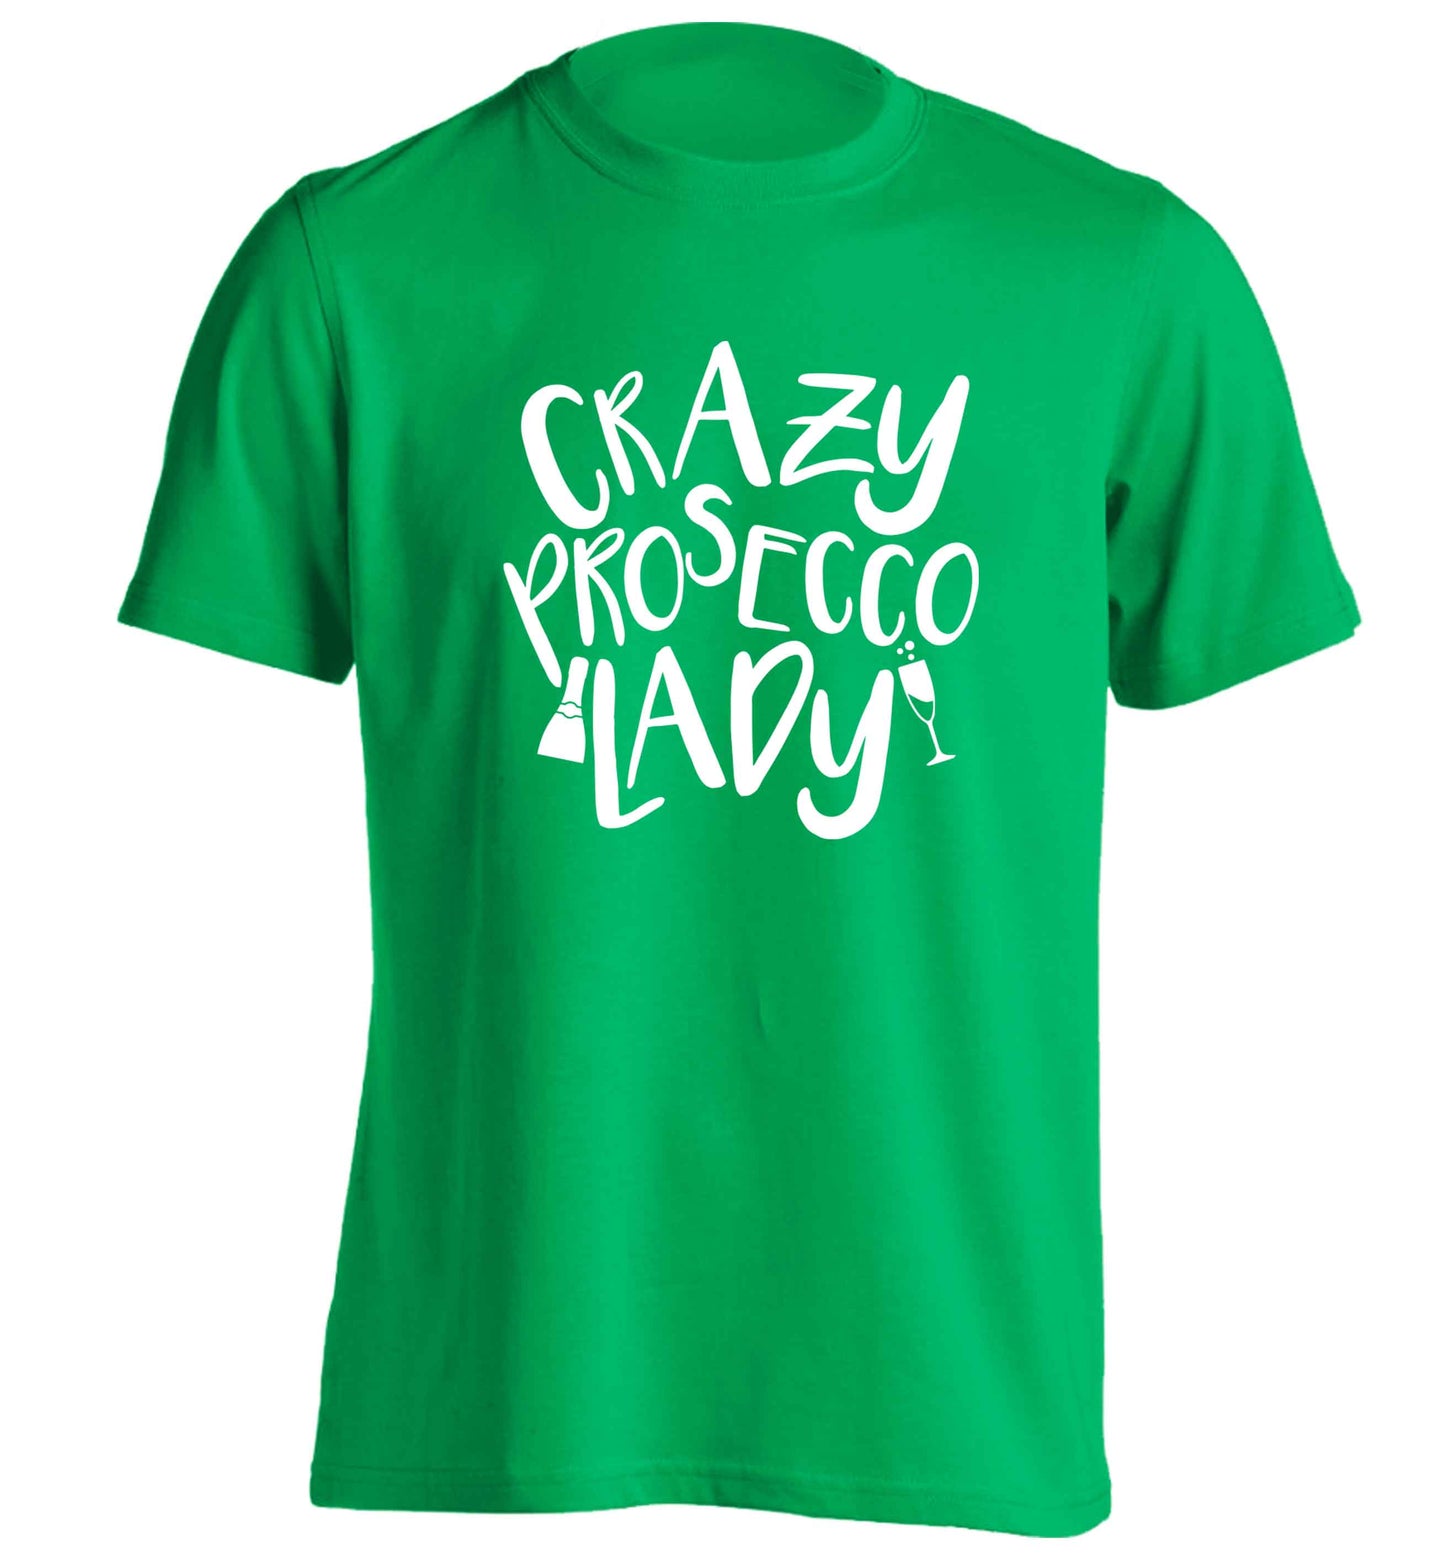 Crazy prosecco lady adults unisex green Tshirt 2XL